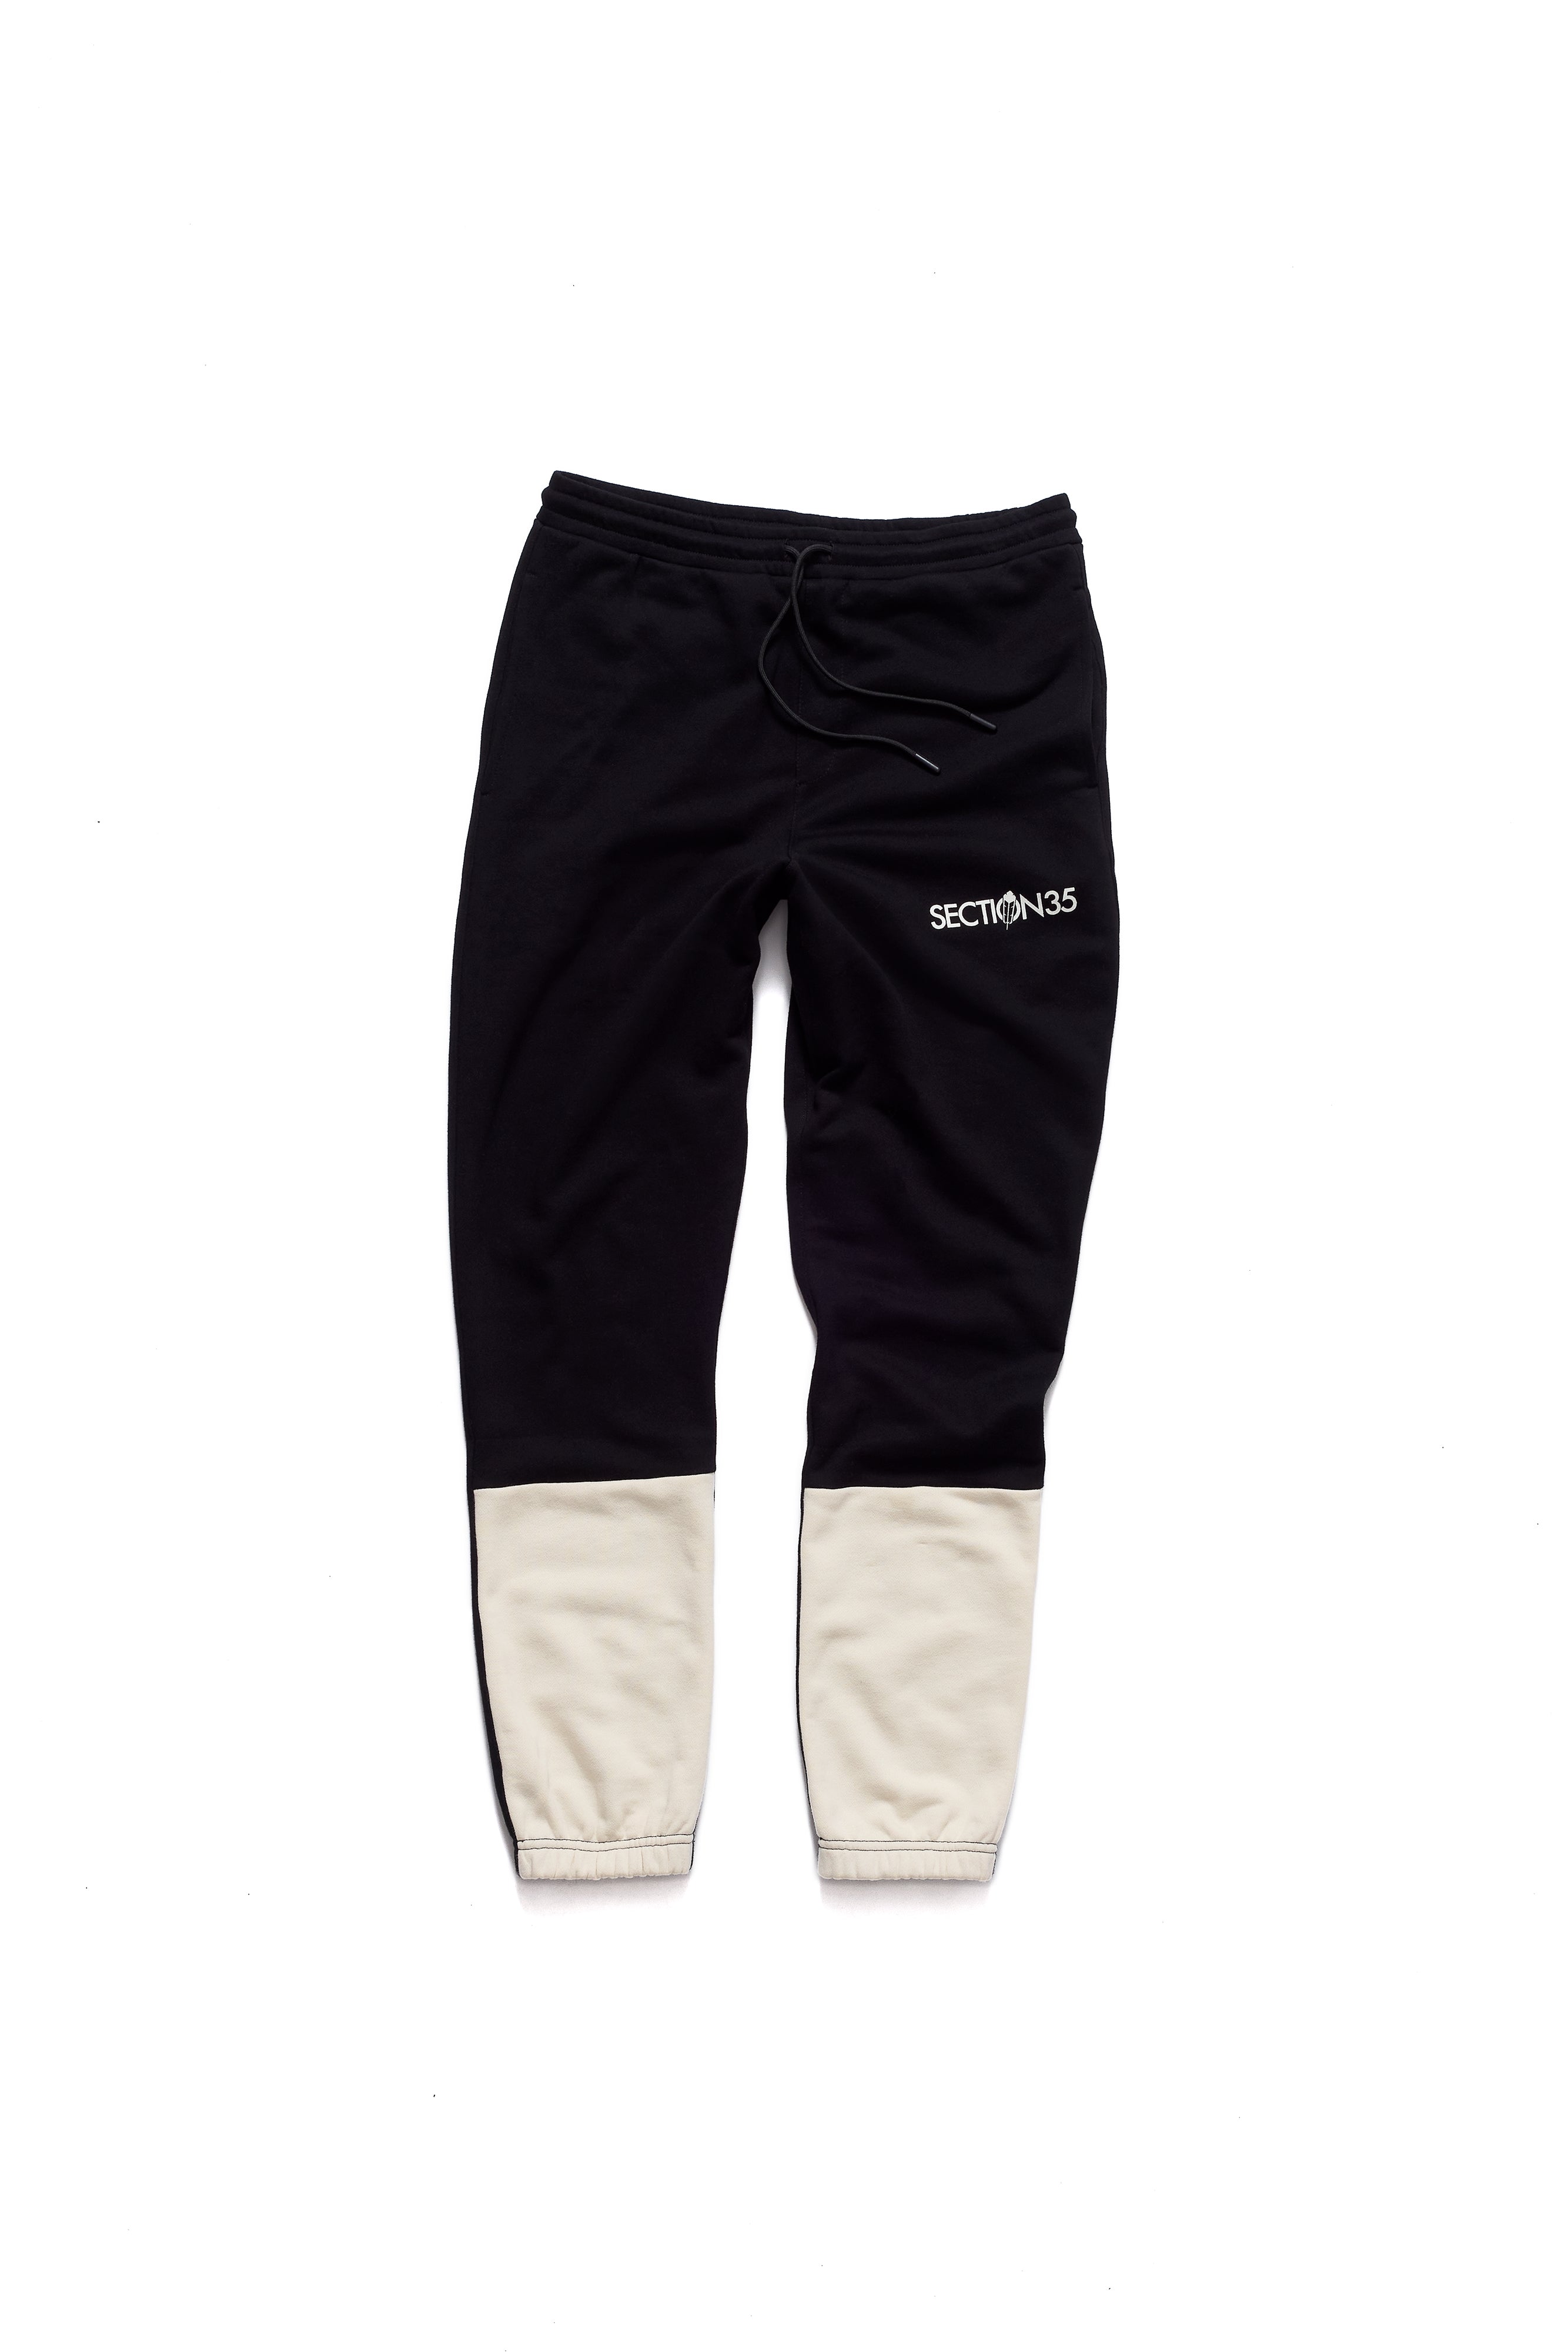 OG Colour Block Sweatpants - Black